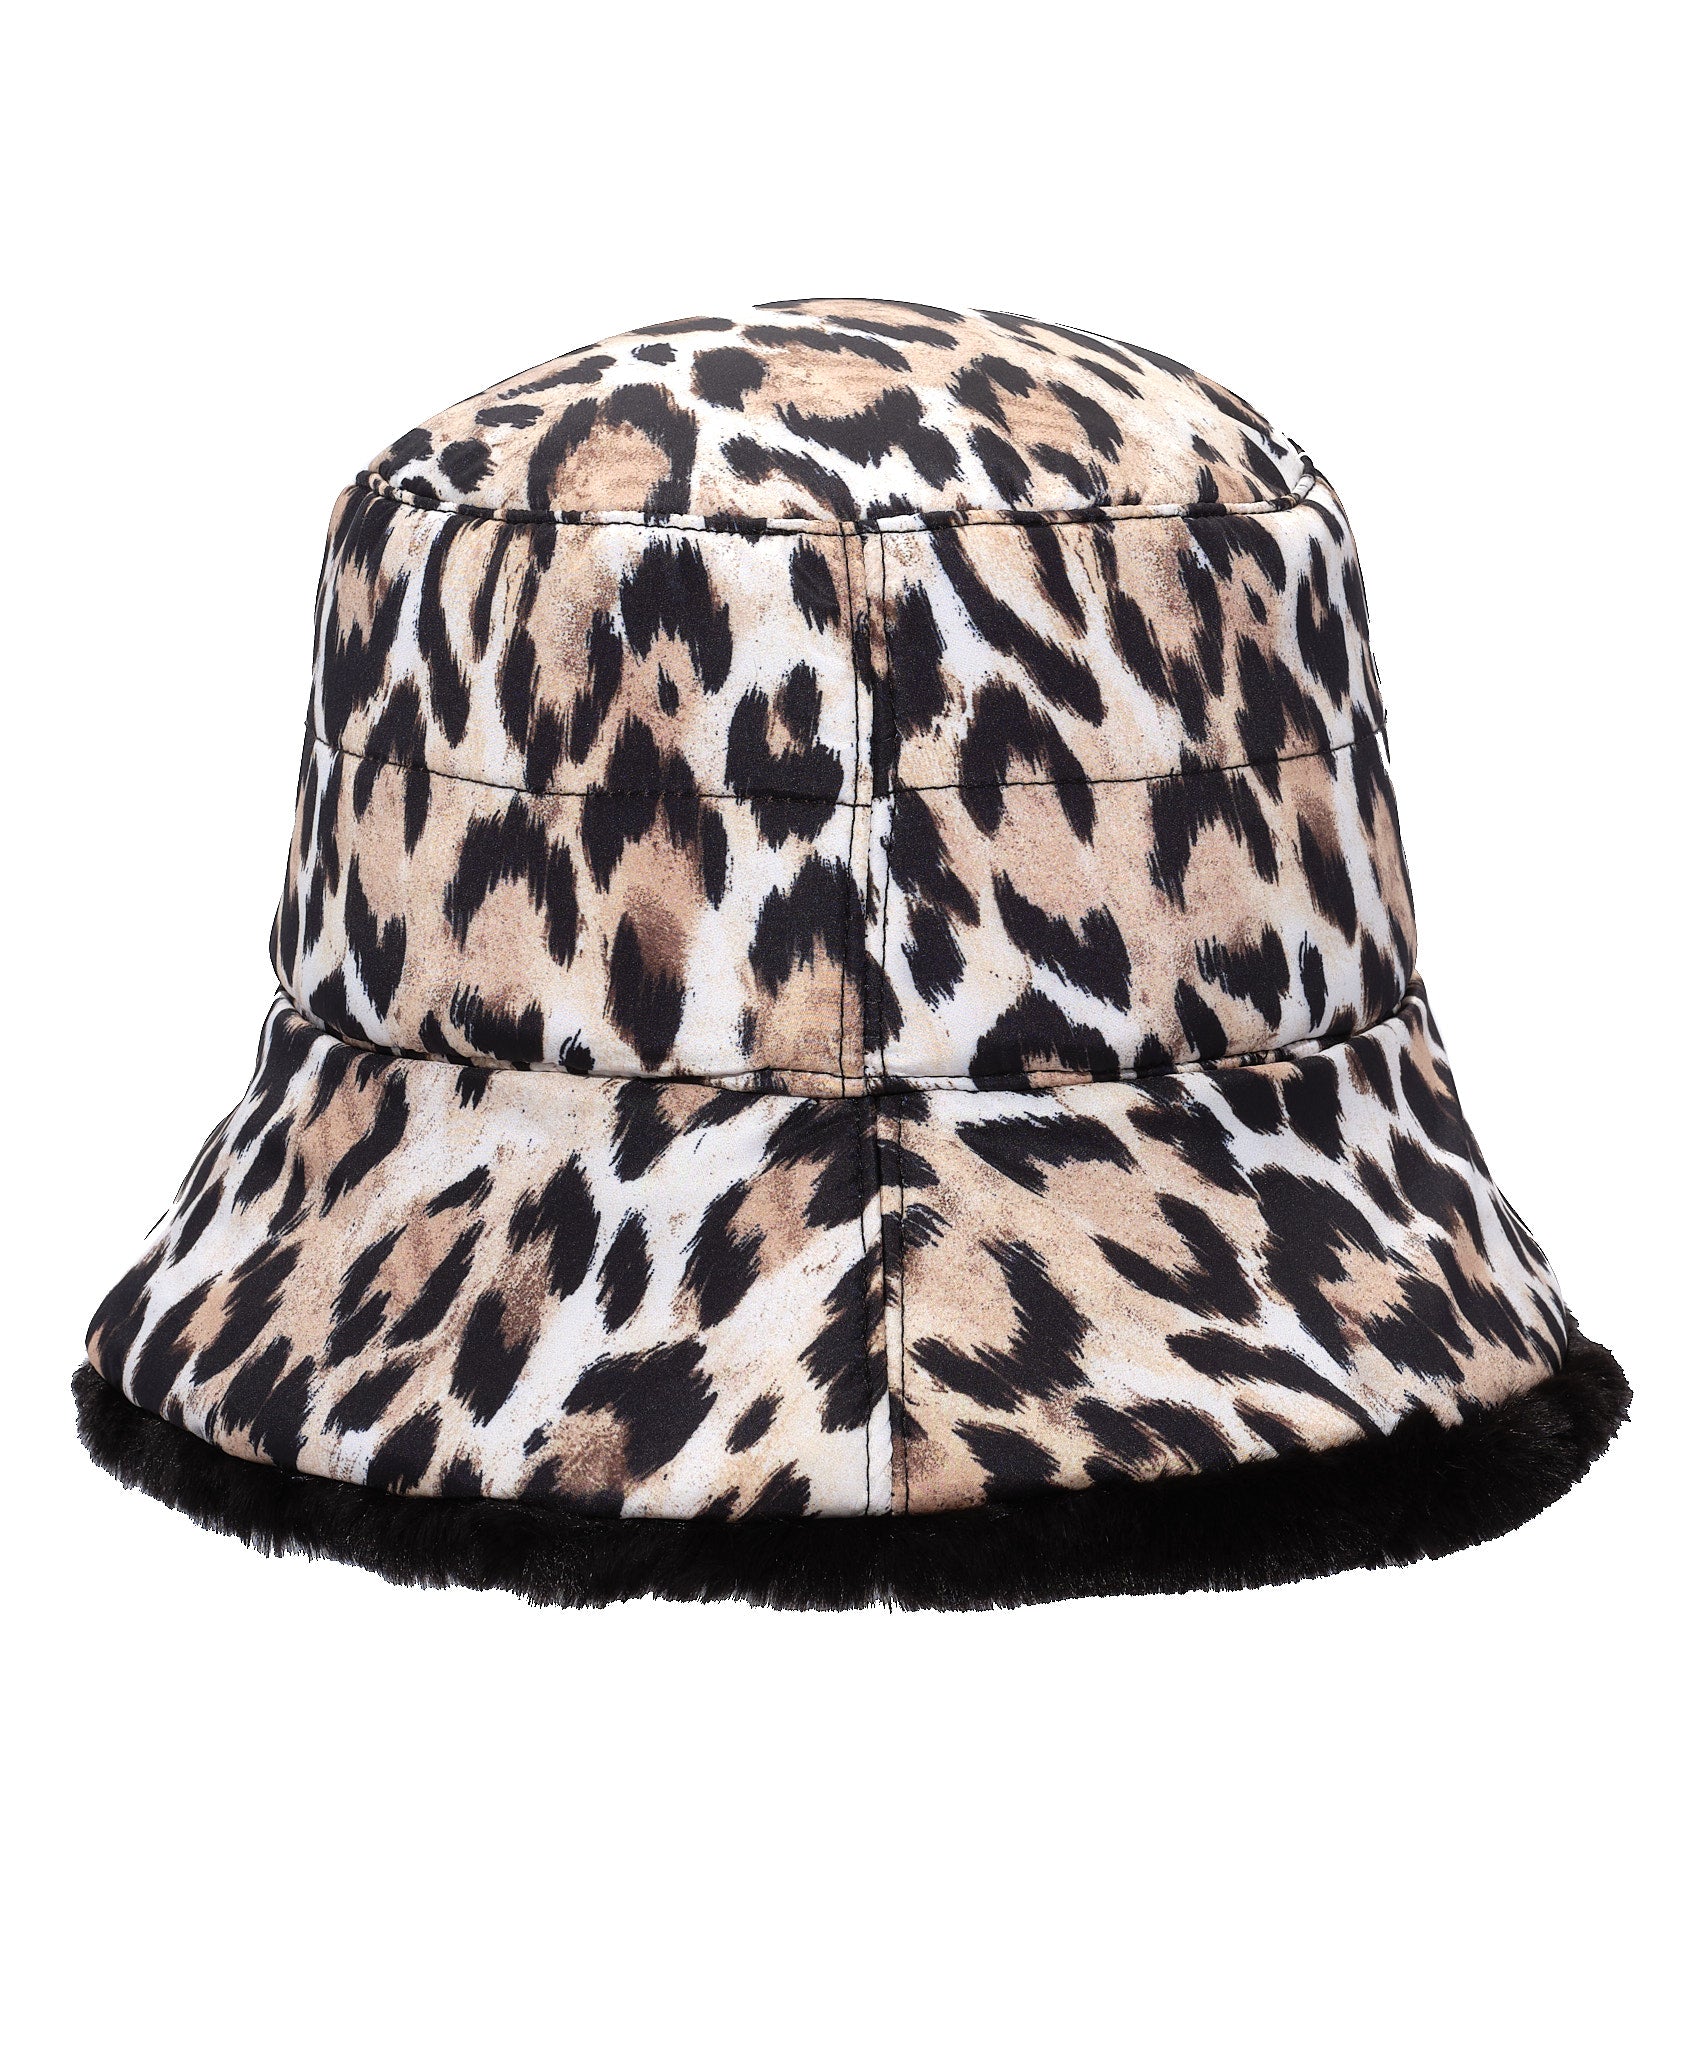 Reversible Leopard Bucket Hat in color Natural